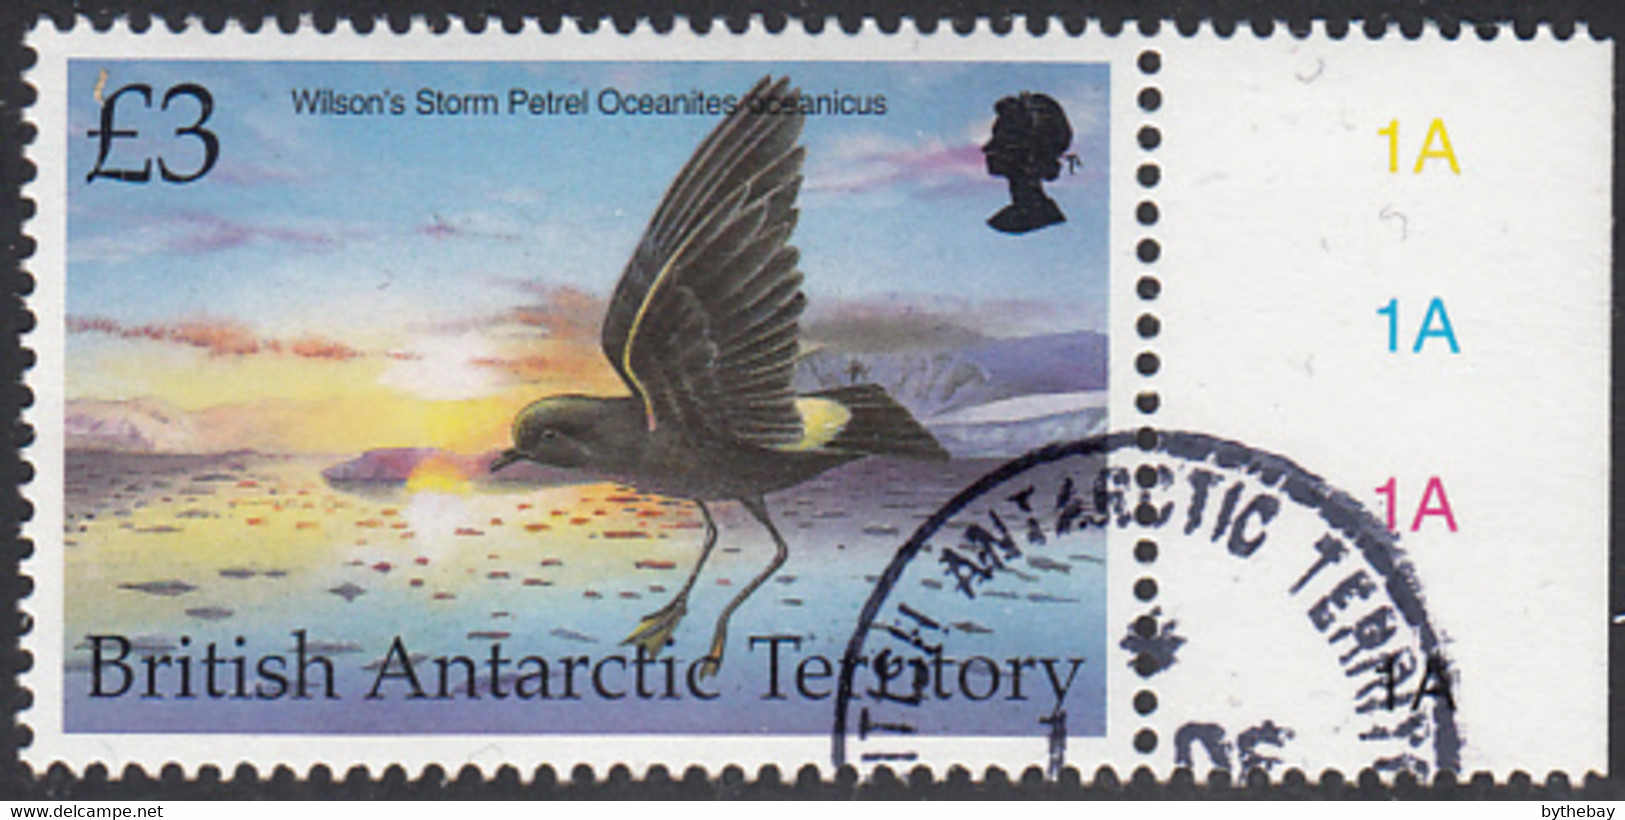 British Antarctic Territory 1998 Used Sc #273 3pd Wilson's Storm Petrel Birds - Usati